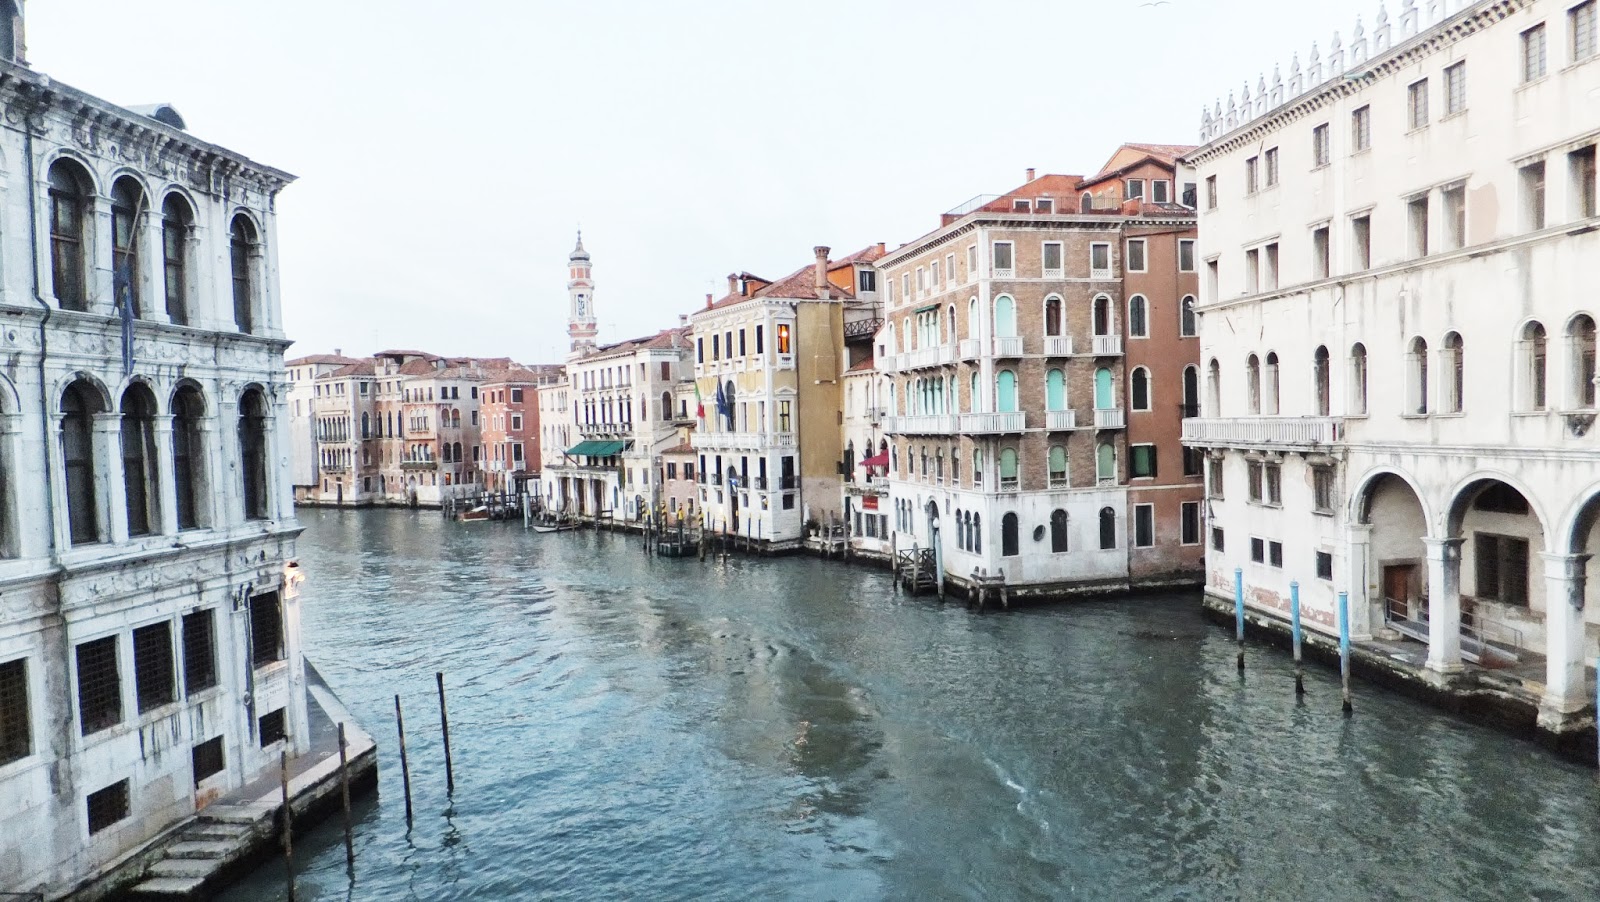 Gran Canal, Canalazzo, Venecia, Venezia, Italia, Elisa N, Blog de Viajes, Lifestyle, Travel